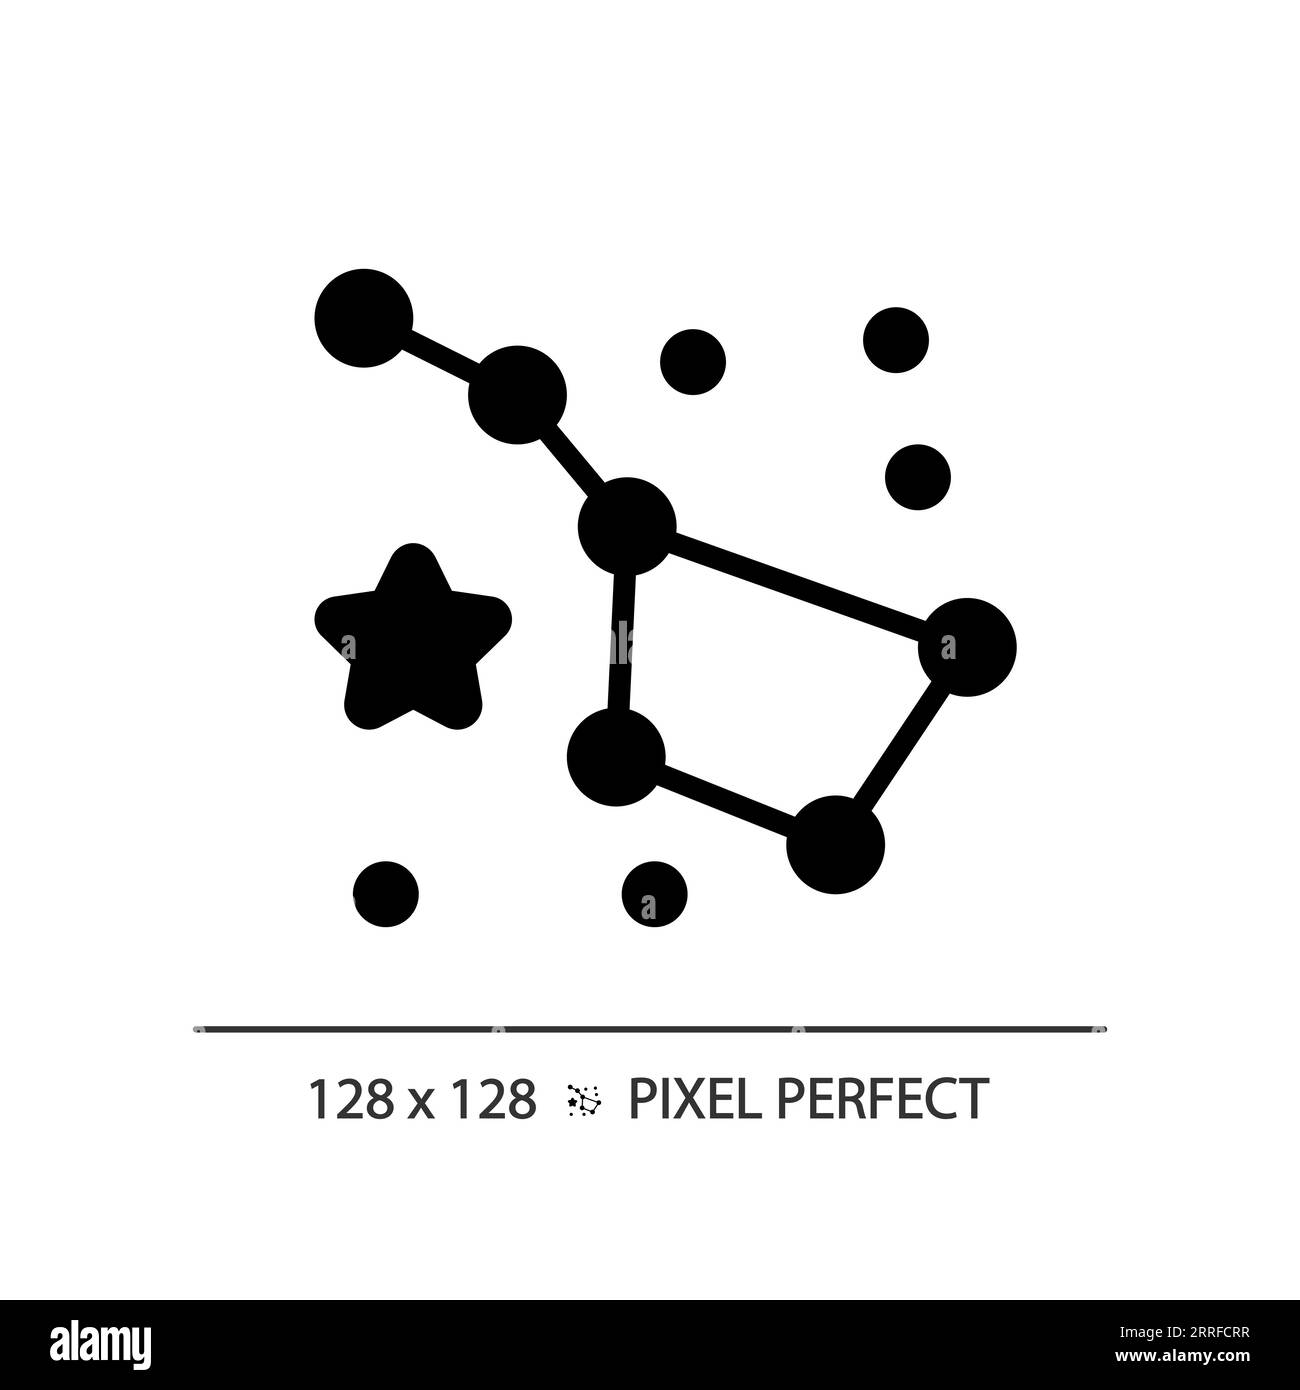 Constellation pixel perfect black glyph icon Stock Vector